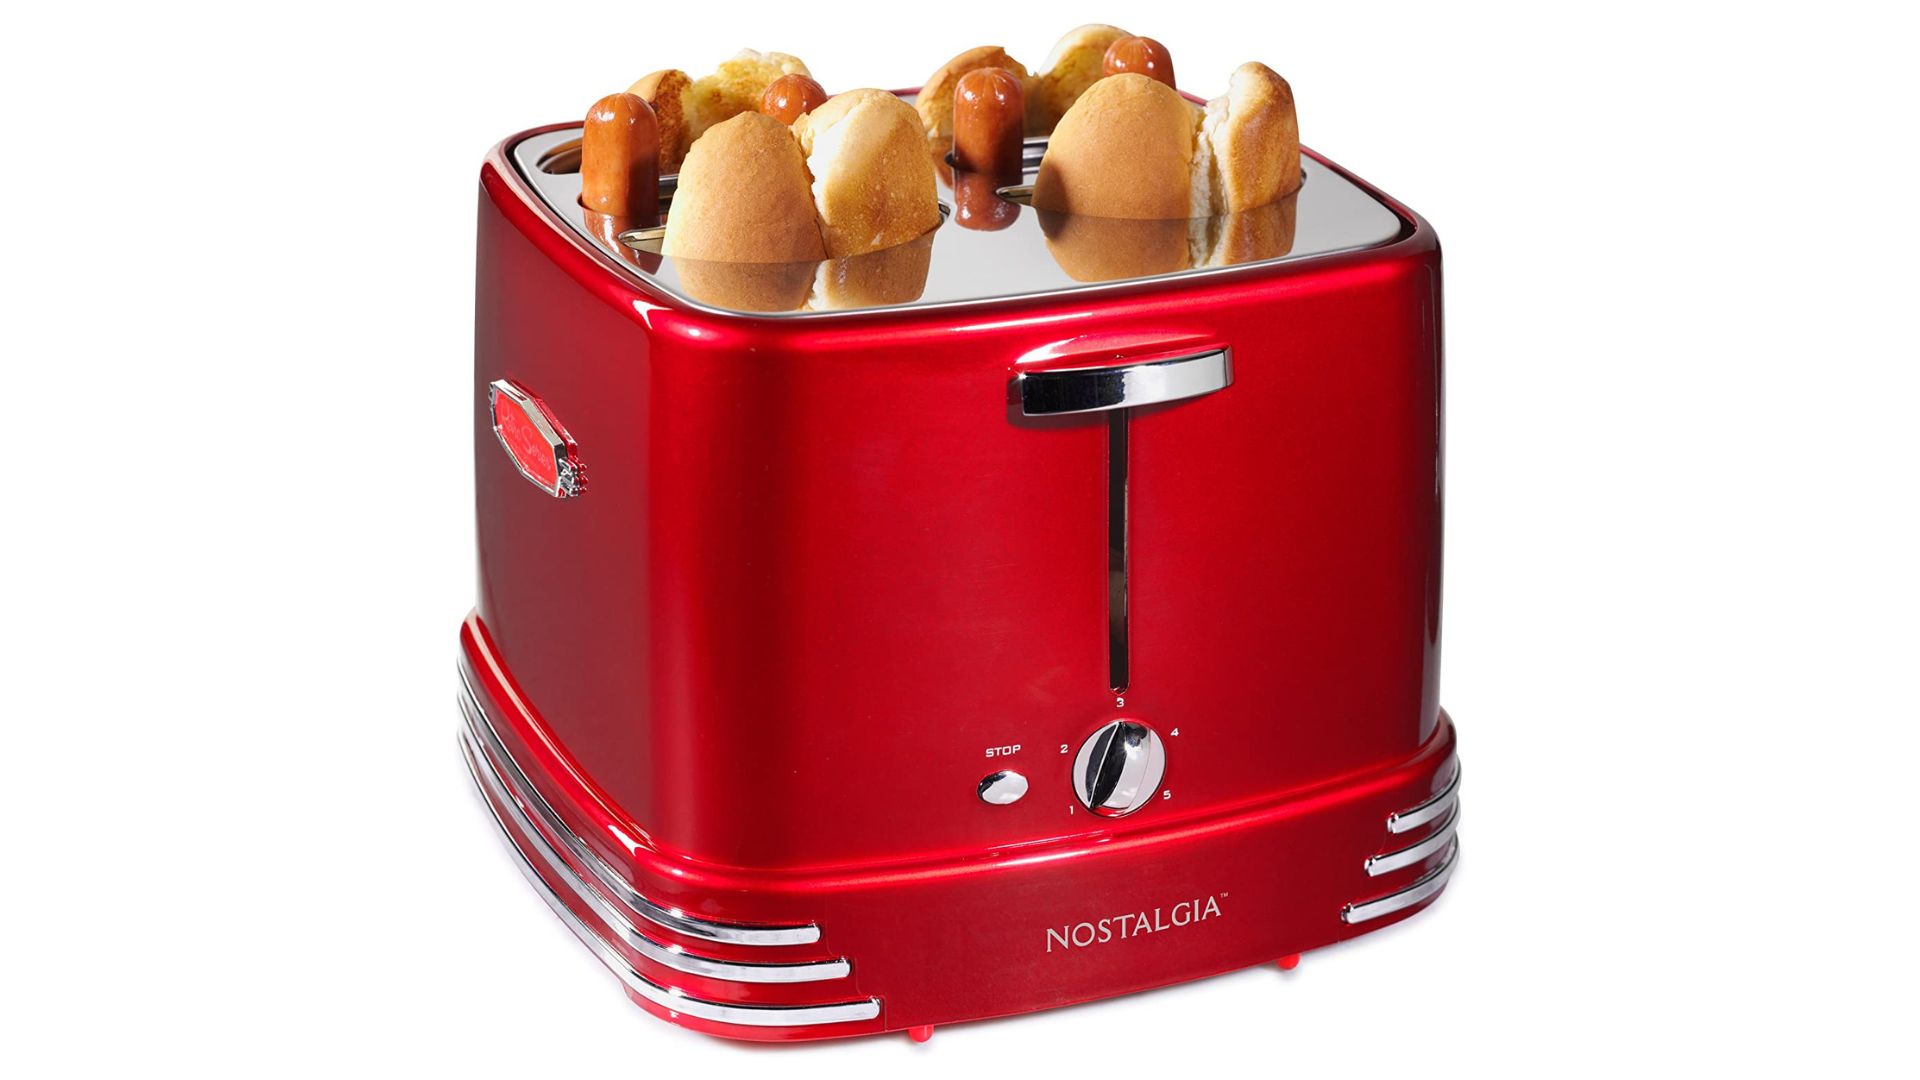 Kitchen cooking gadgets: Nostalgia 4 Slot Hot Dog and Bun Toaster